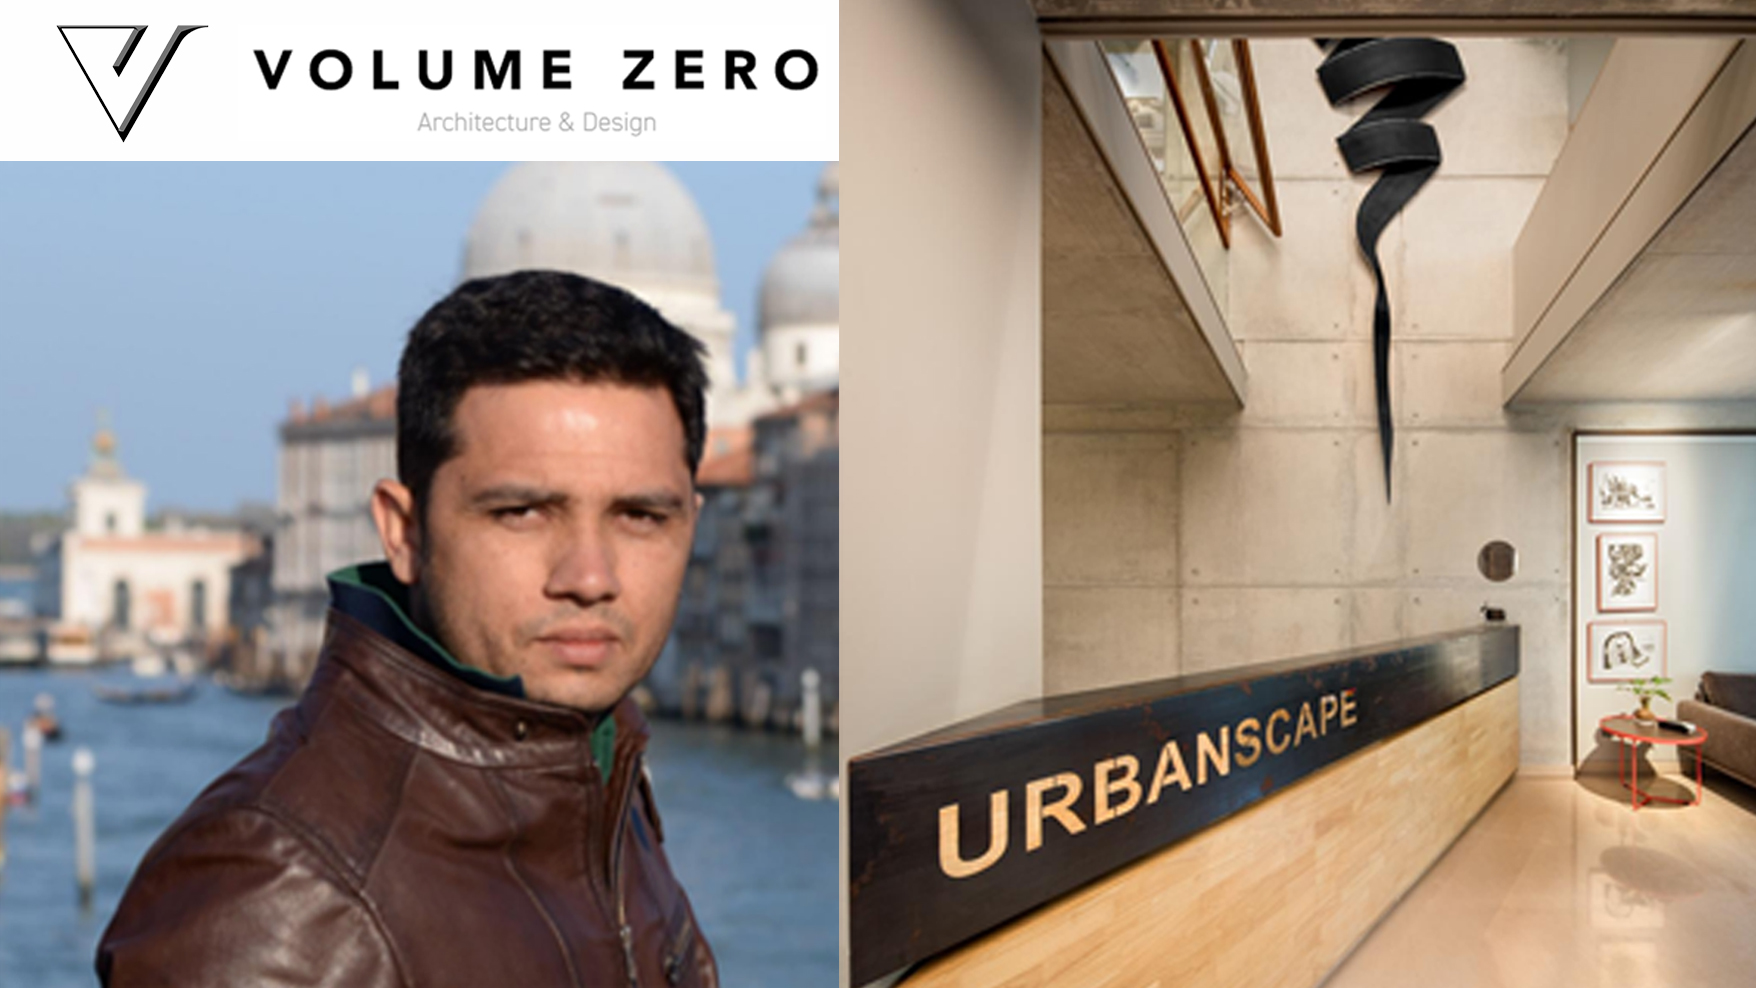 Volume Zero (International) covers Urbanscape Architects